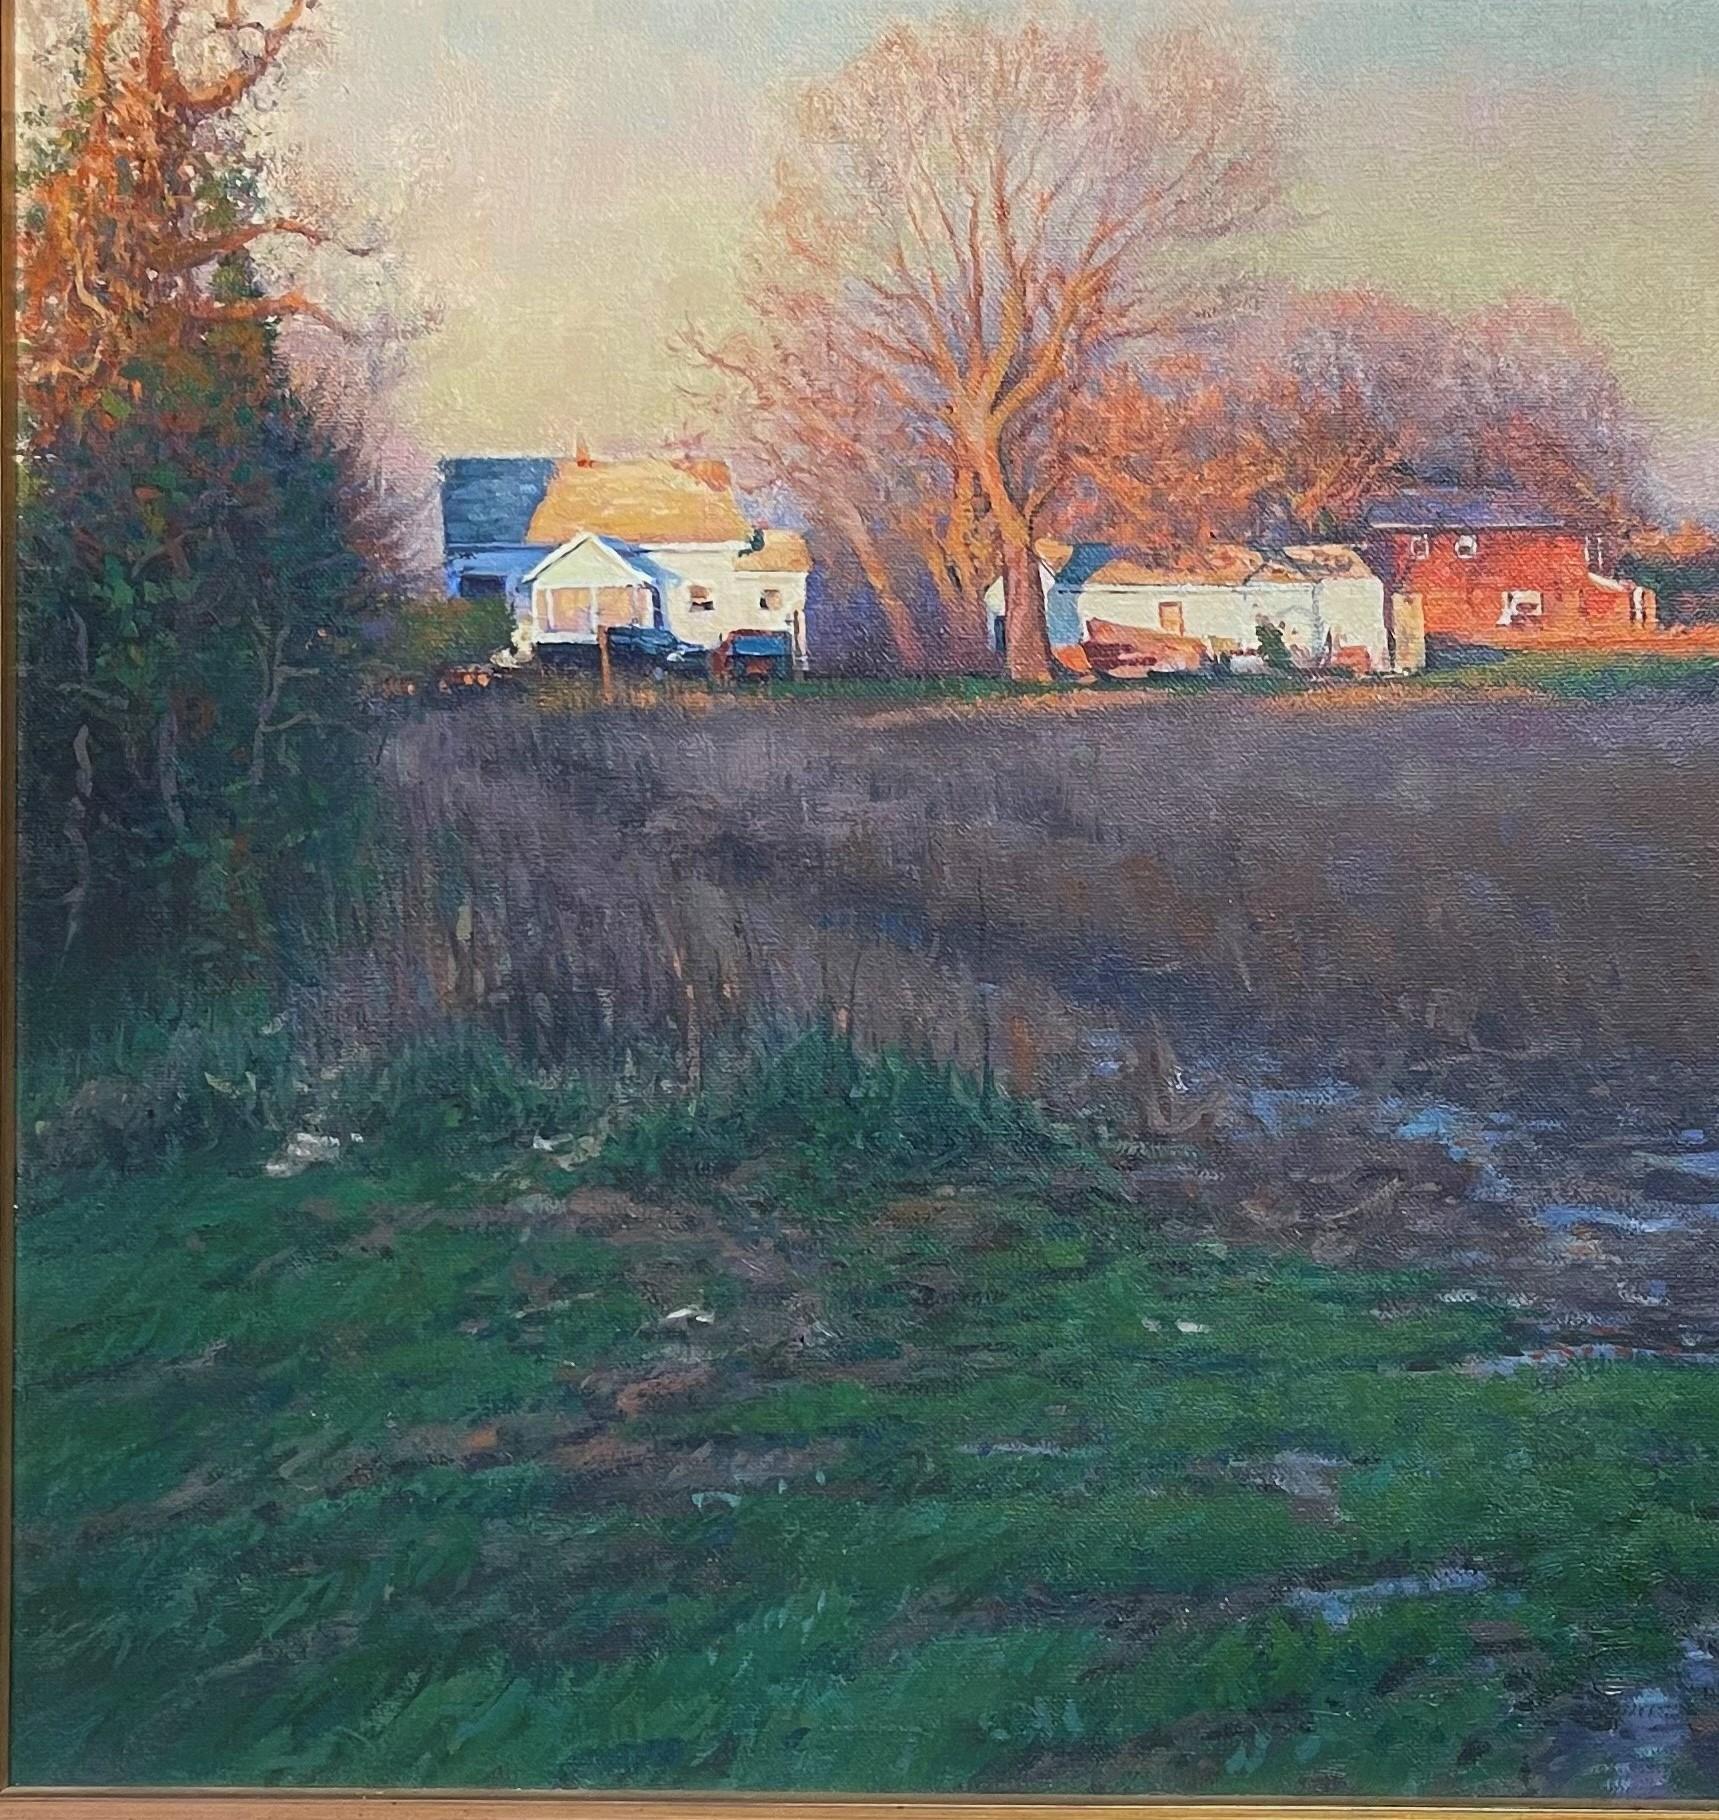  Impressionistic Rural Farm Landscape Oil Painting Michael Budden Shadow & Light For Sale 2